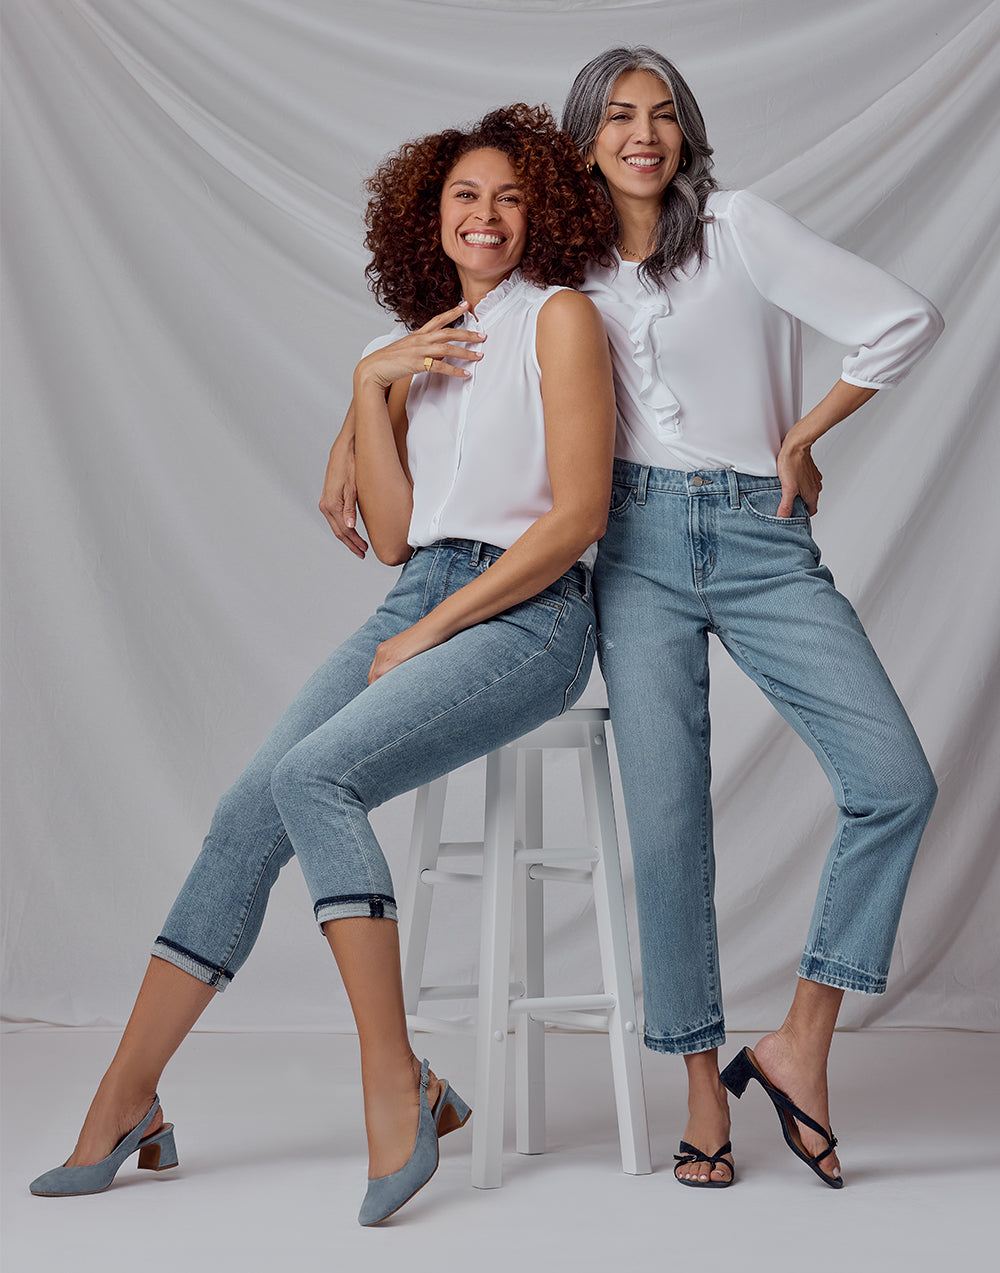 NYDJ | The Original Slimming Jeans | Women's Premium Jeans – NYDJ